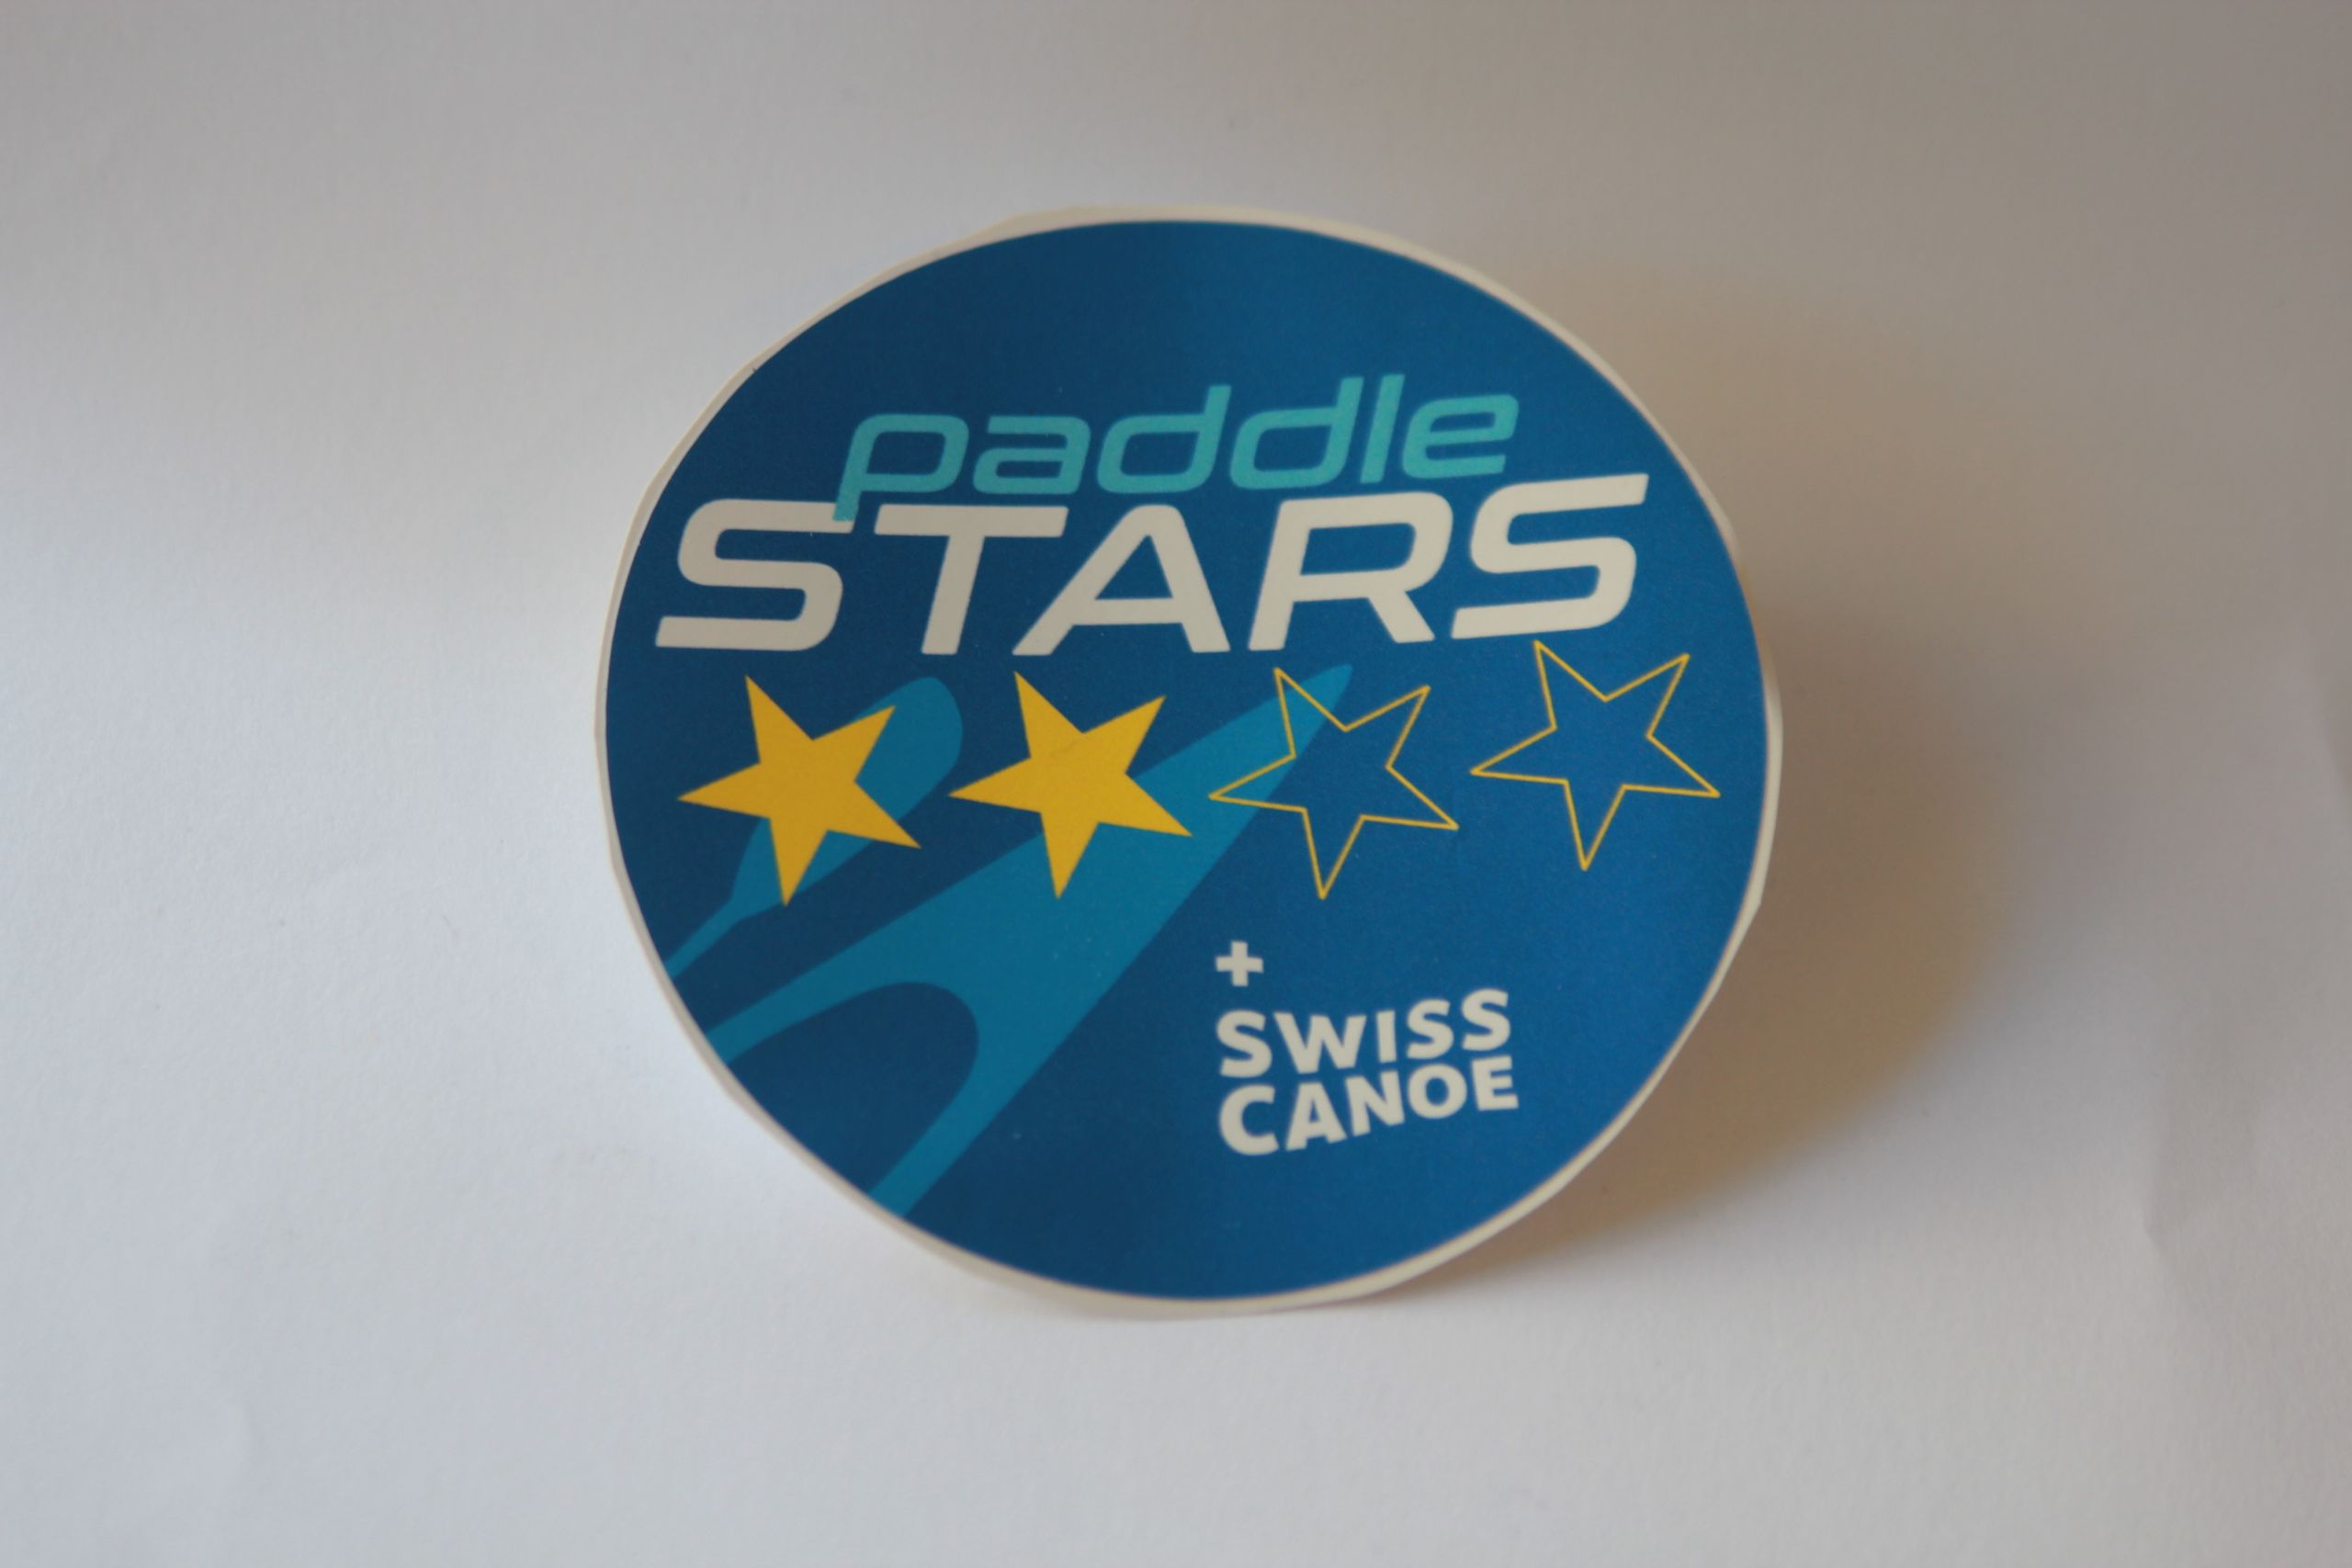 Paddle STARS 2 Sticker